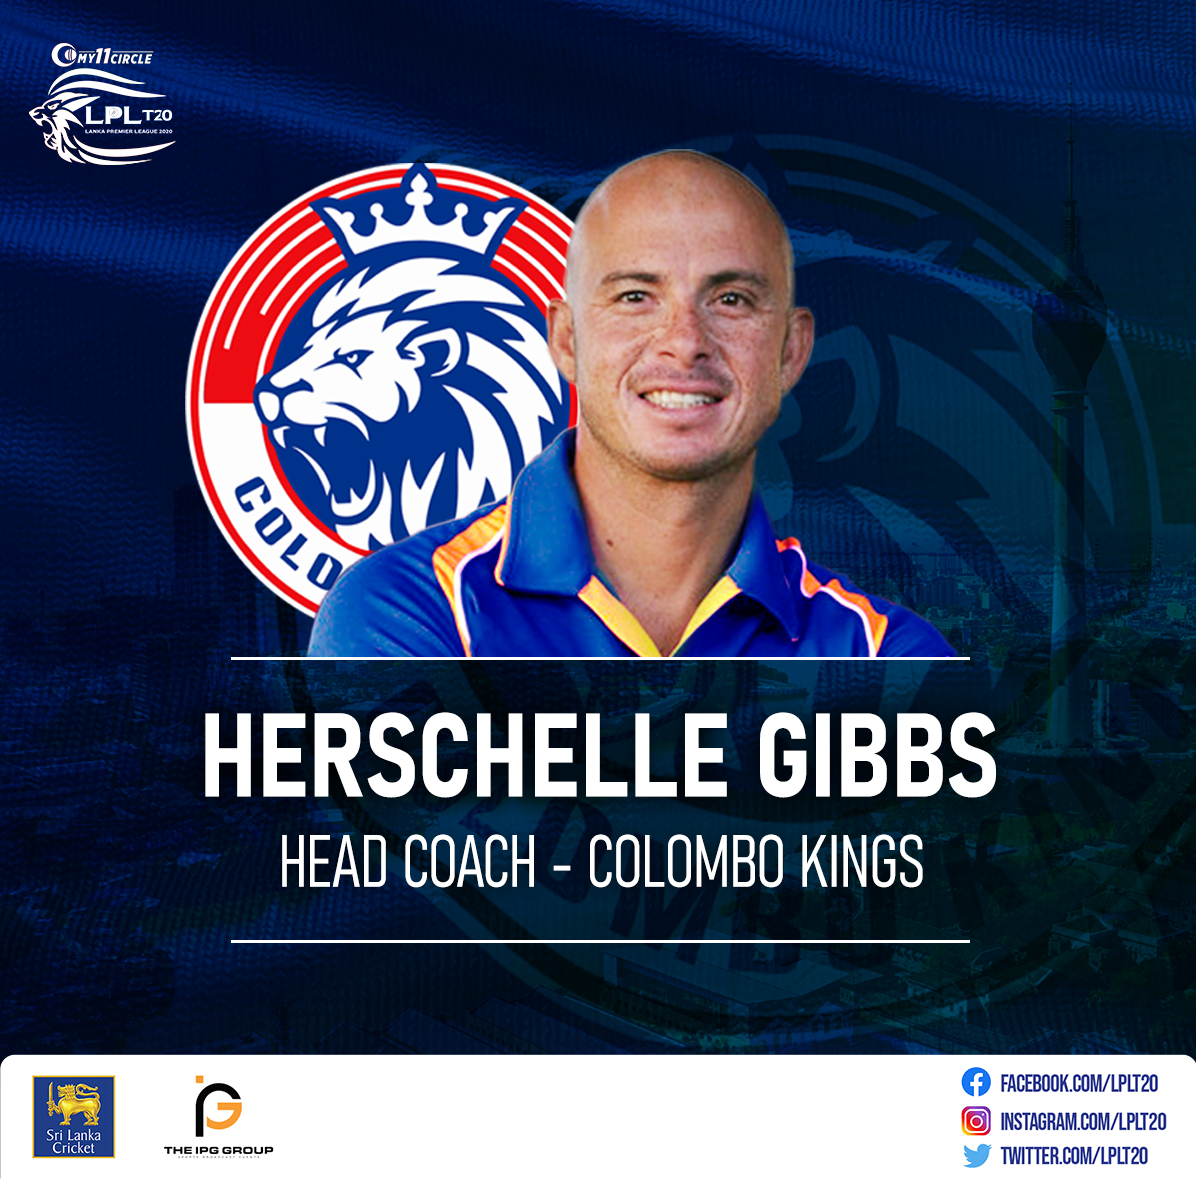 Herschelle Gibbs, Coach guiding Colombo Kings